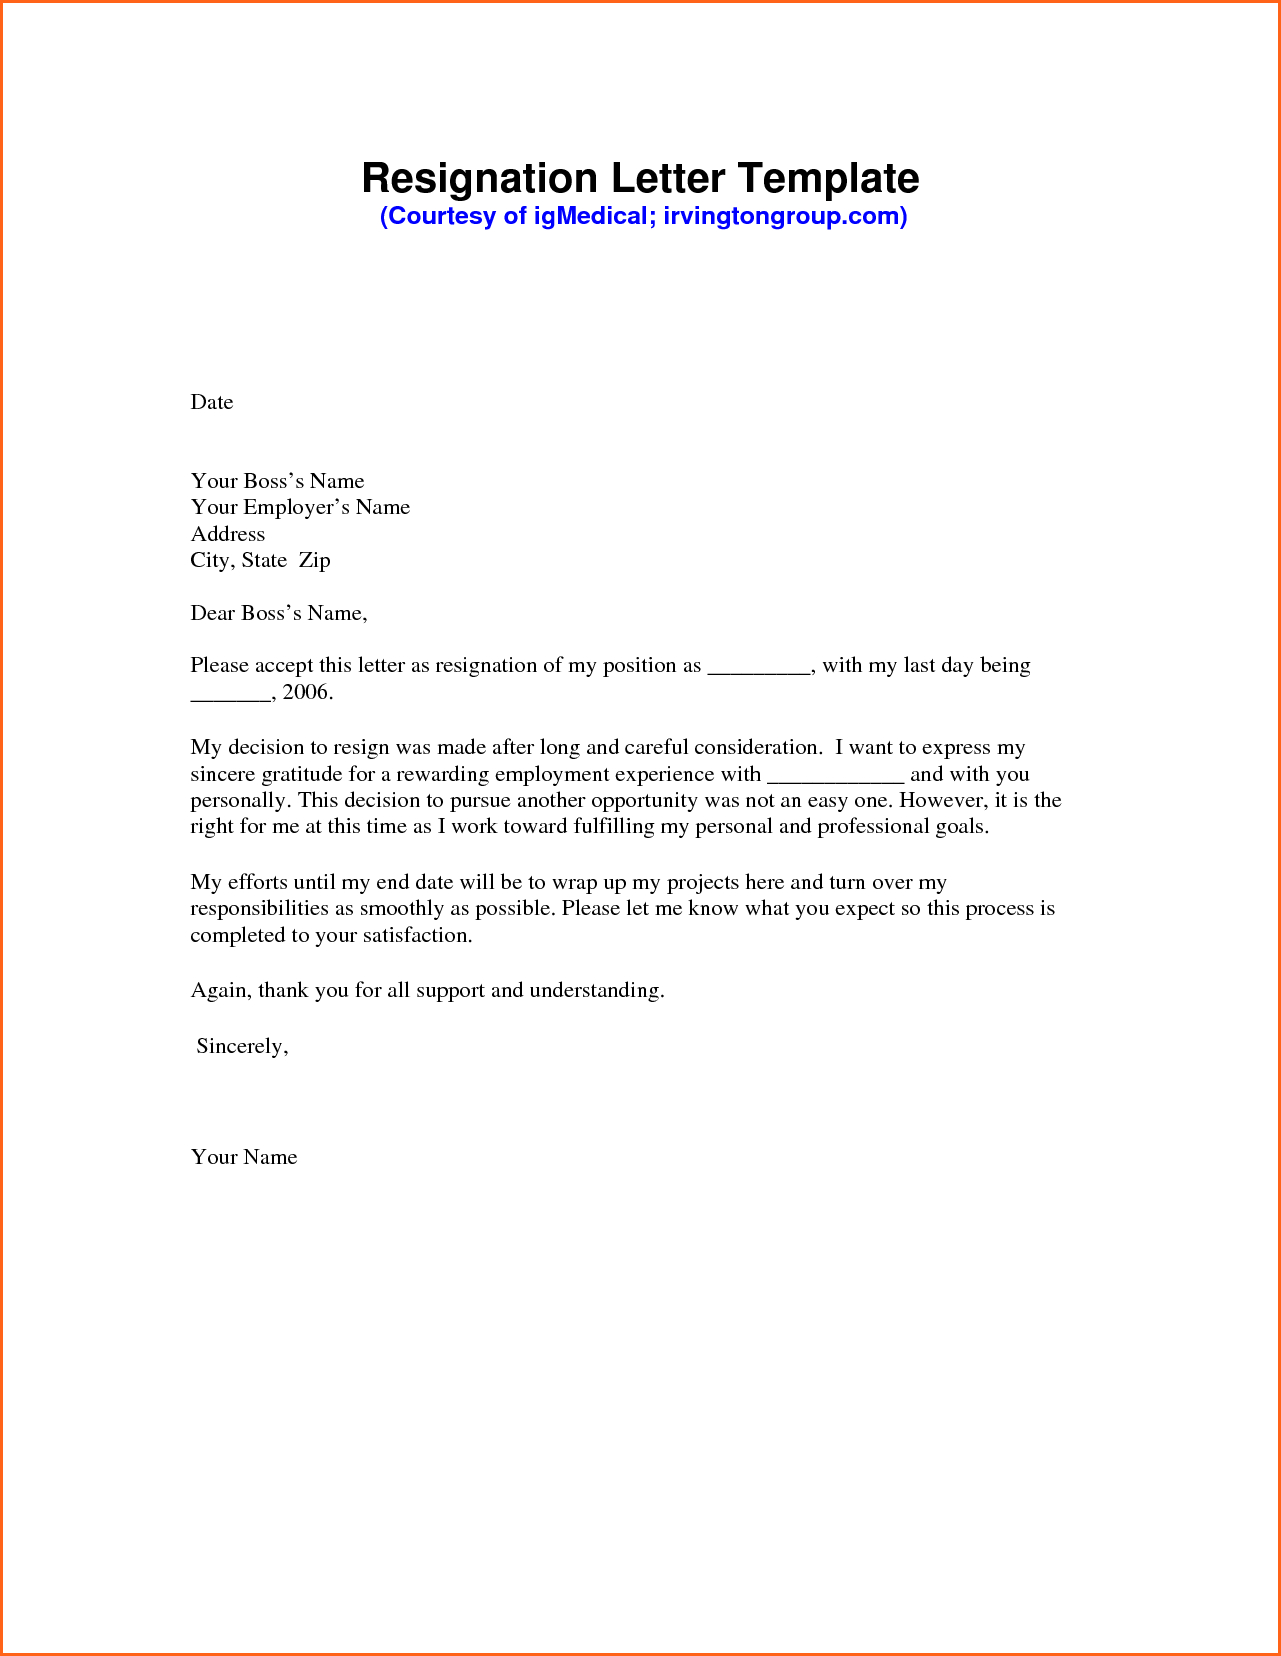 I Quit Letter Template - Resignation Letter Sample Pdf Mechanical Engineering Resume Template